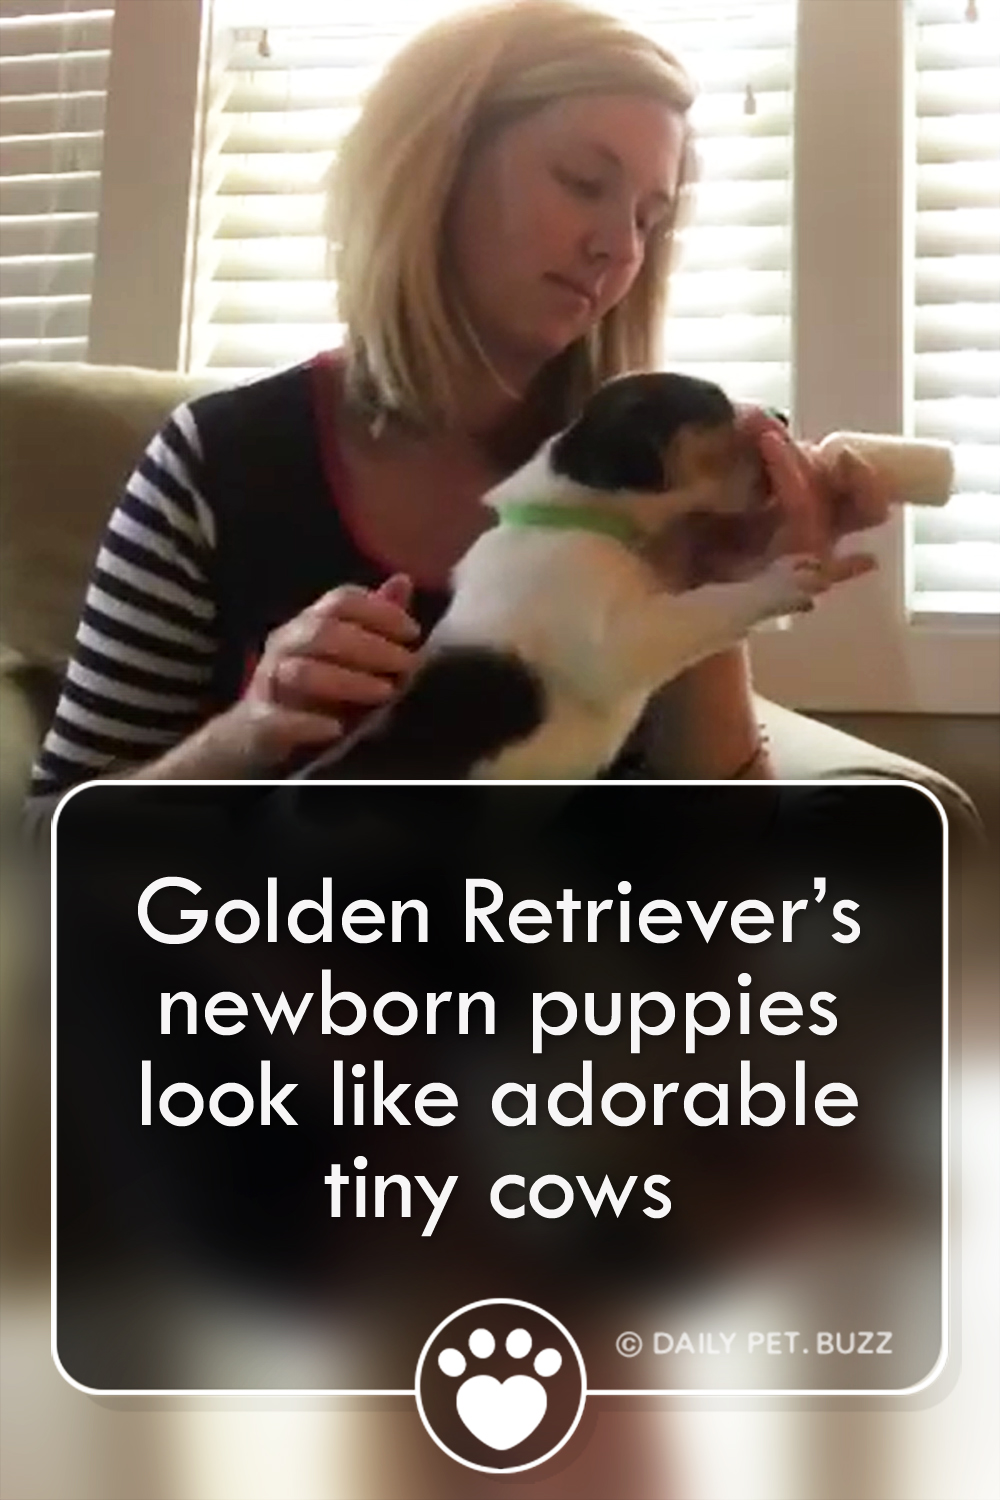 Golden Retriever’s newborn puppies look like adorable tiny cows